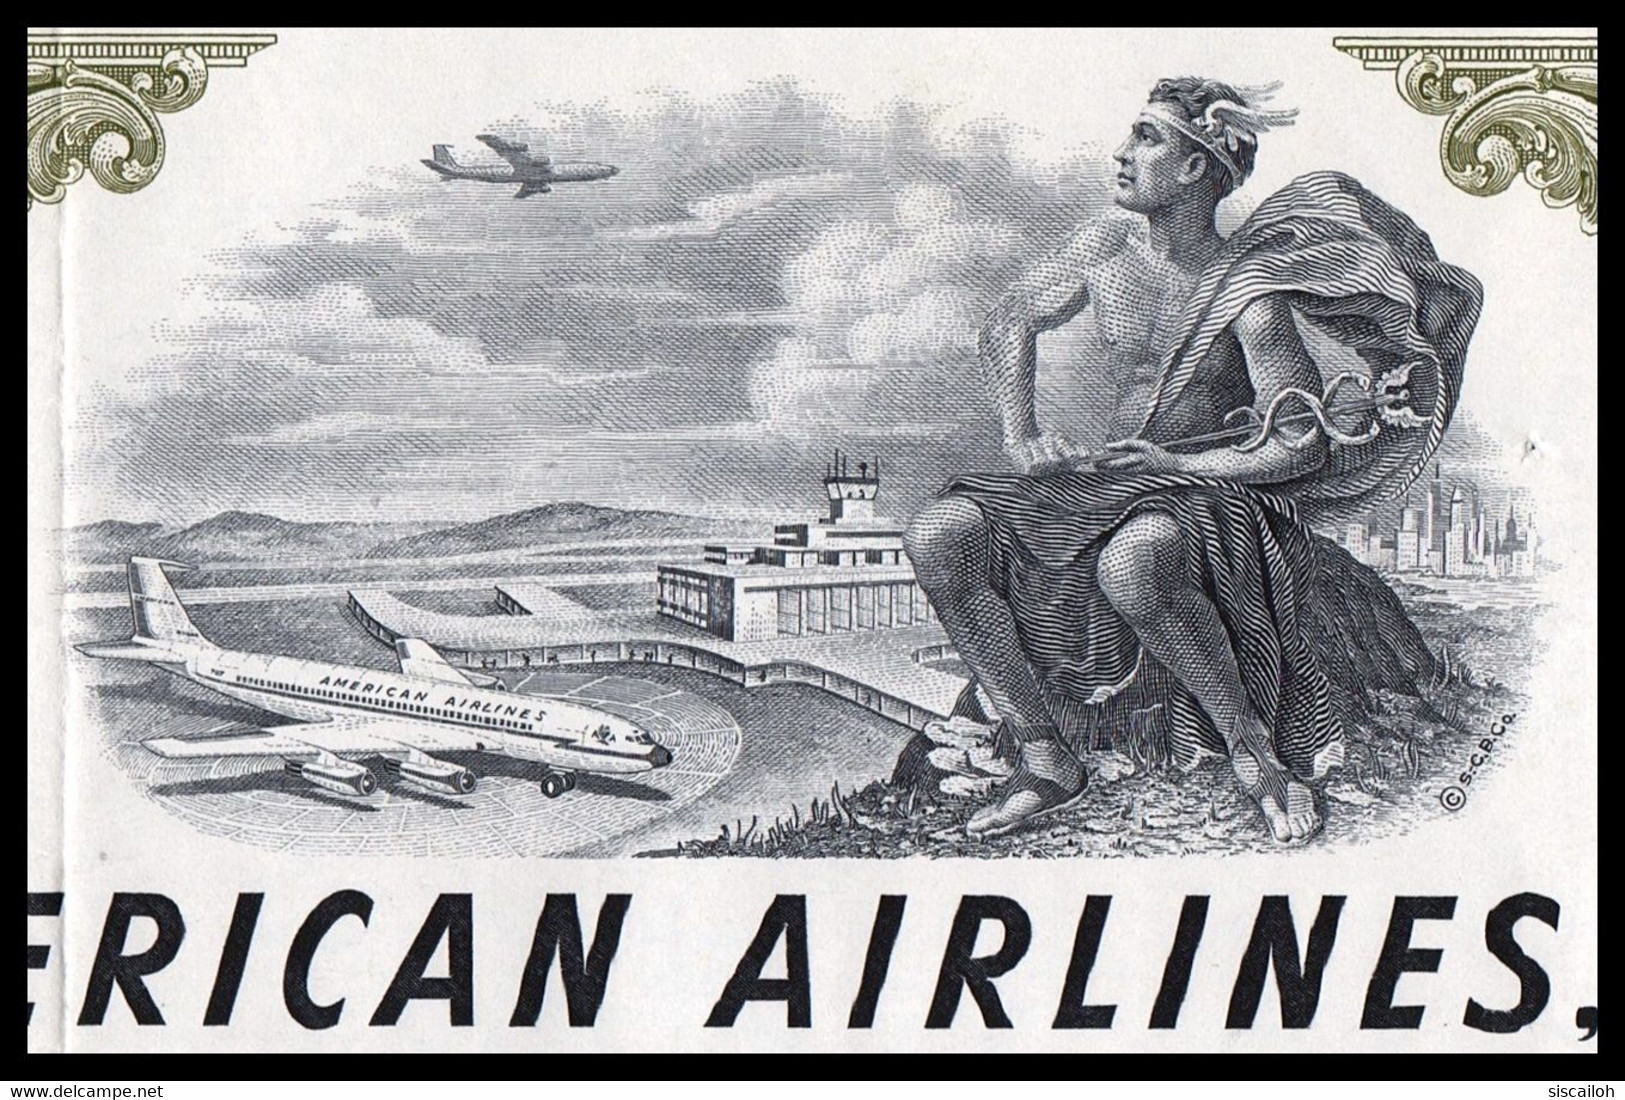 1967 American Airlines, Inc. - $100 Bond Certificate - Aviación